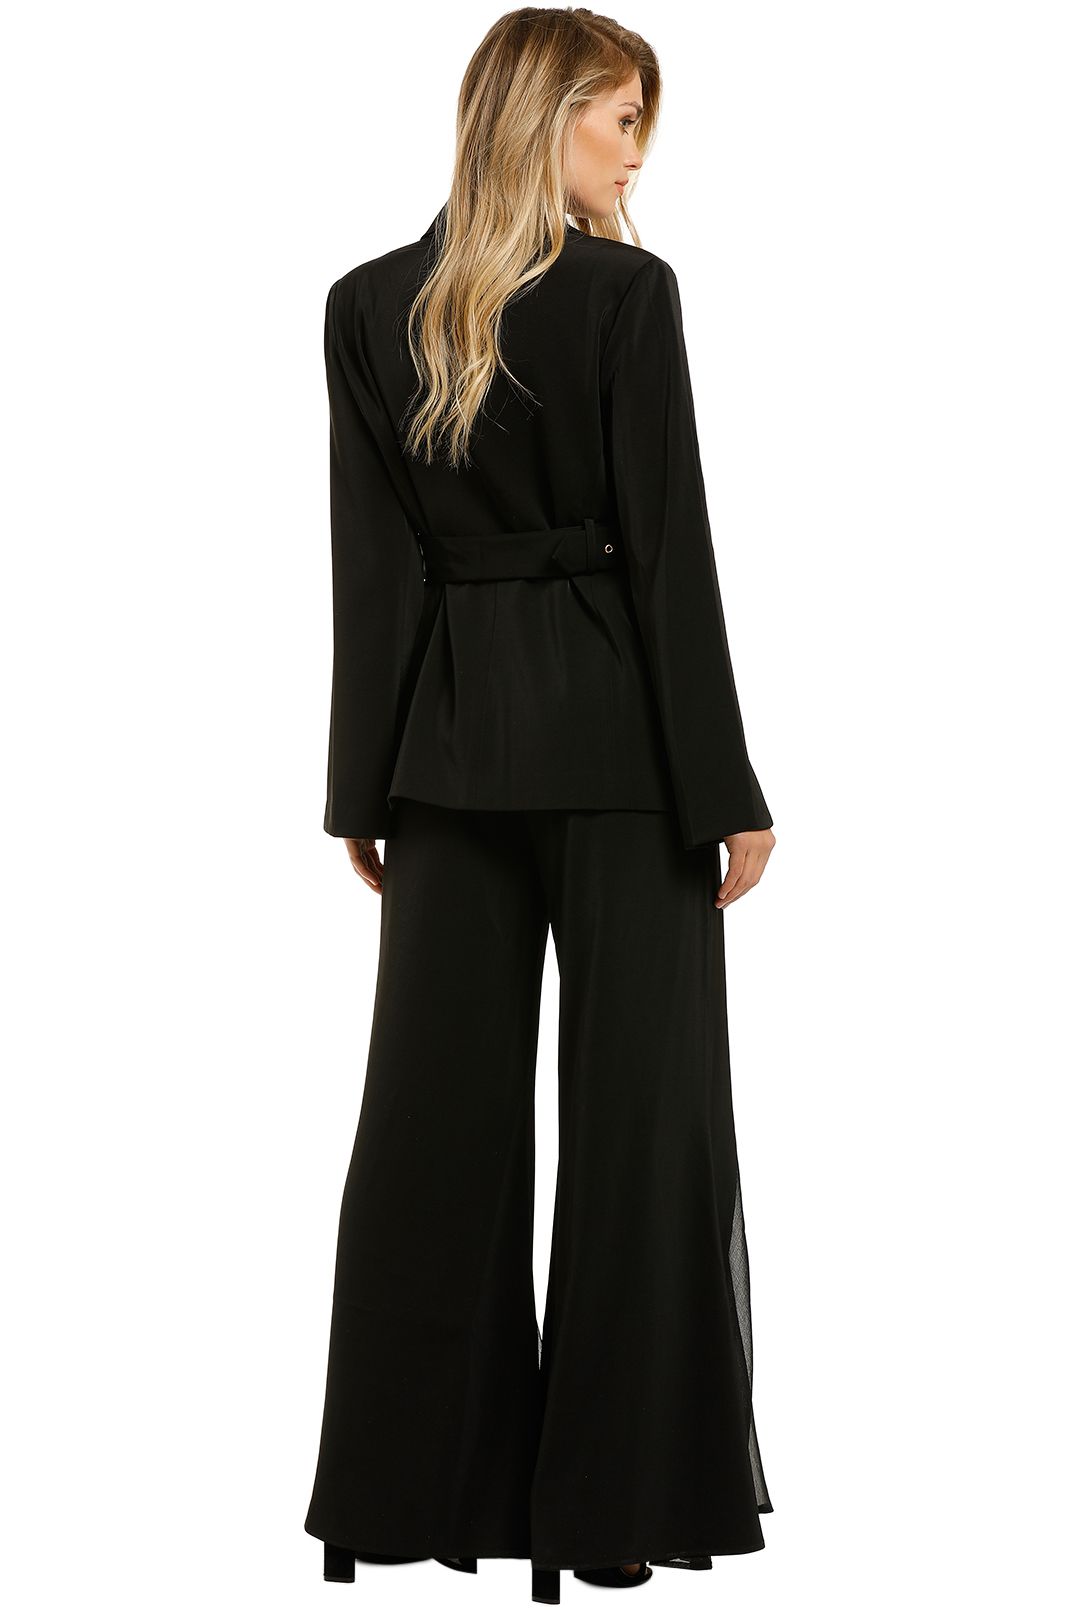 Cara Blazer and Pant Set in Black by Elliatt for Rent | GlamCorner